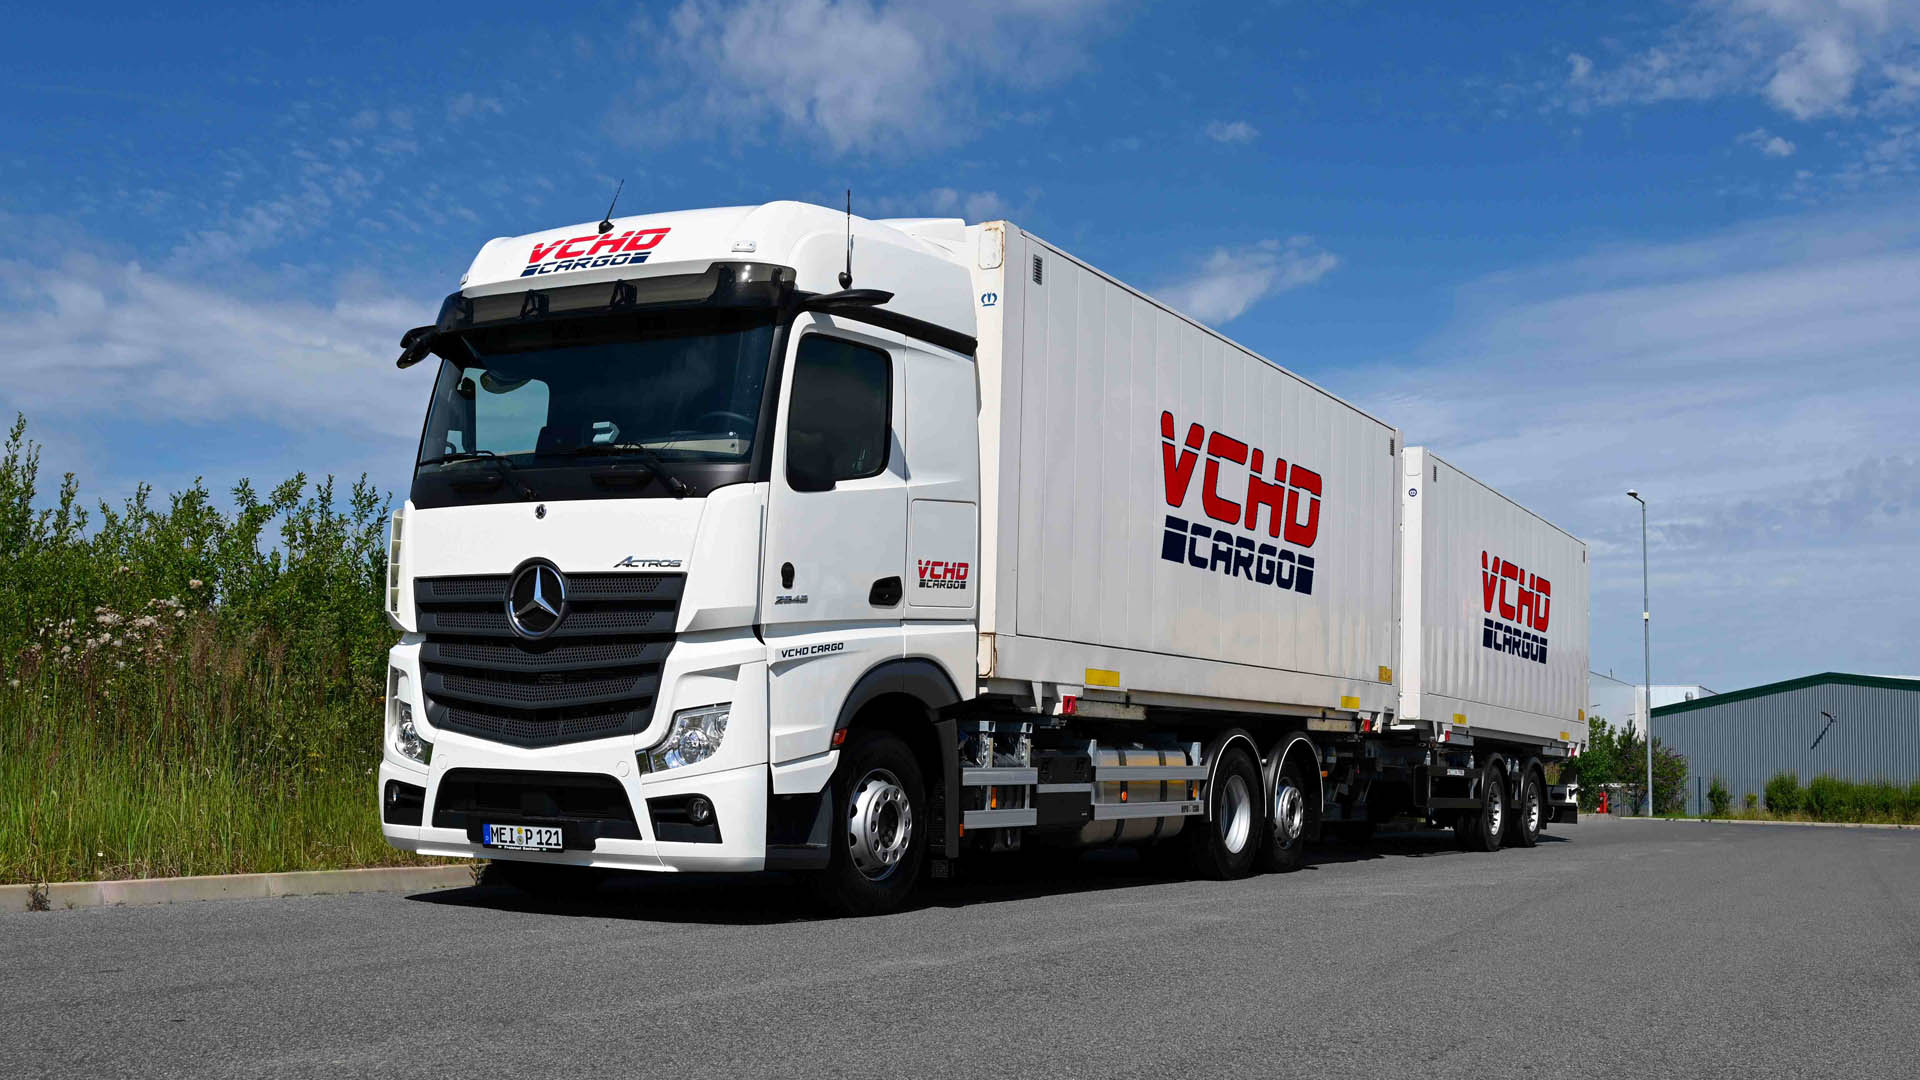 Skupina VCHD Cargo vloni vyrostla o 23 procent